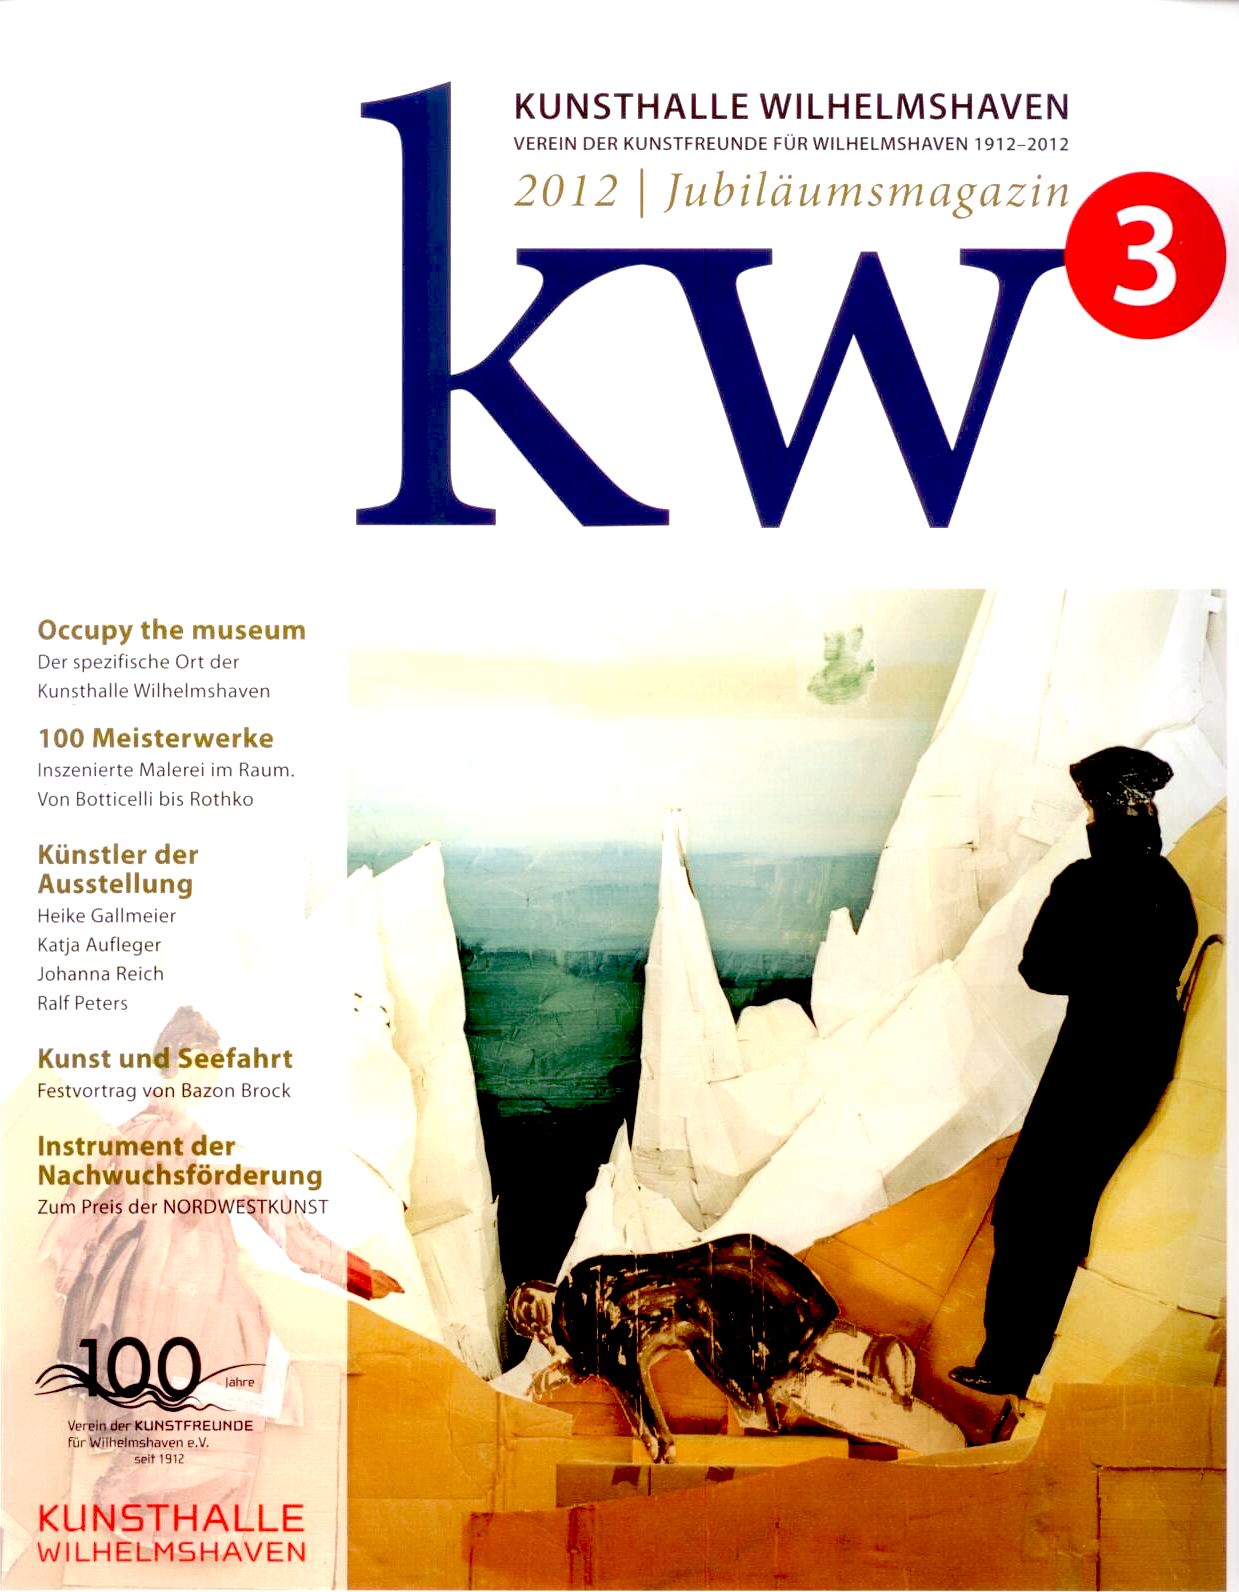 kw3, Bild: Kunsthalle Wilhelmshaven 2012 | Jubiläumsmagazin.